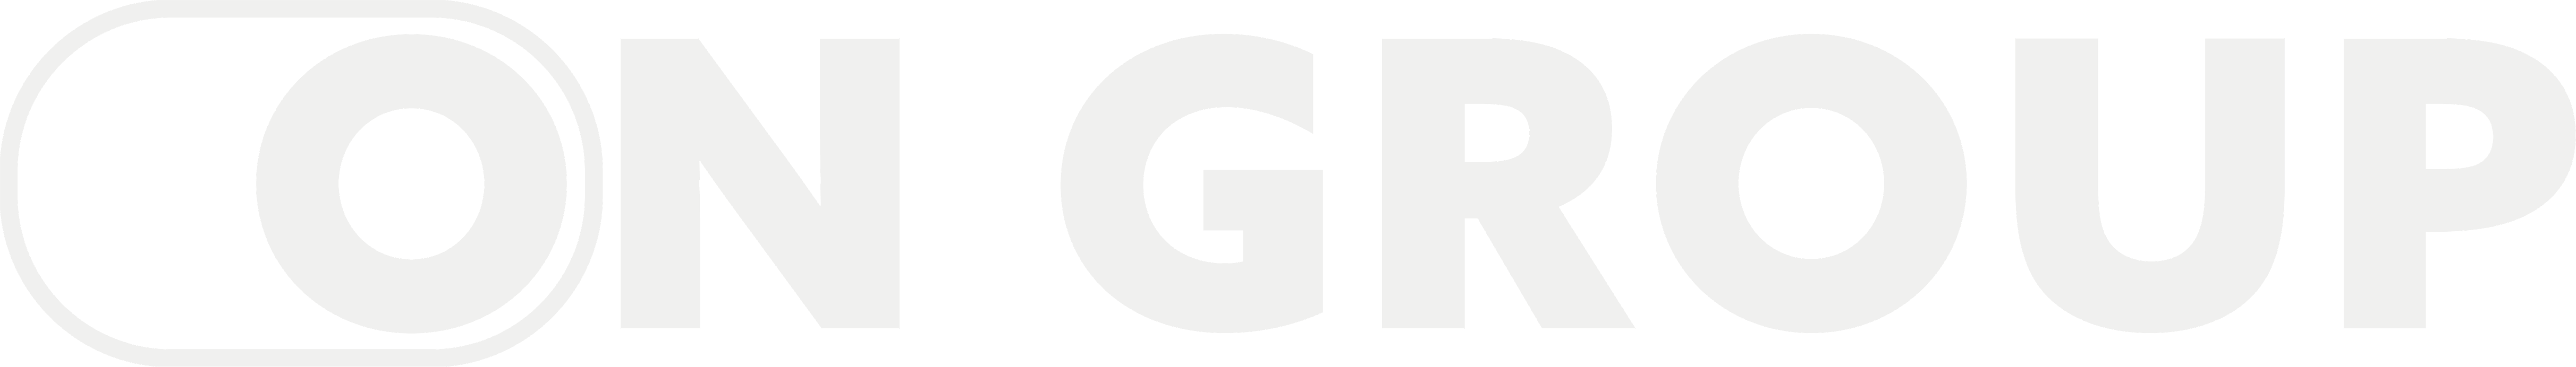 logo-on-group